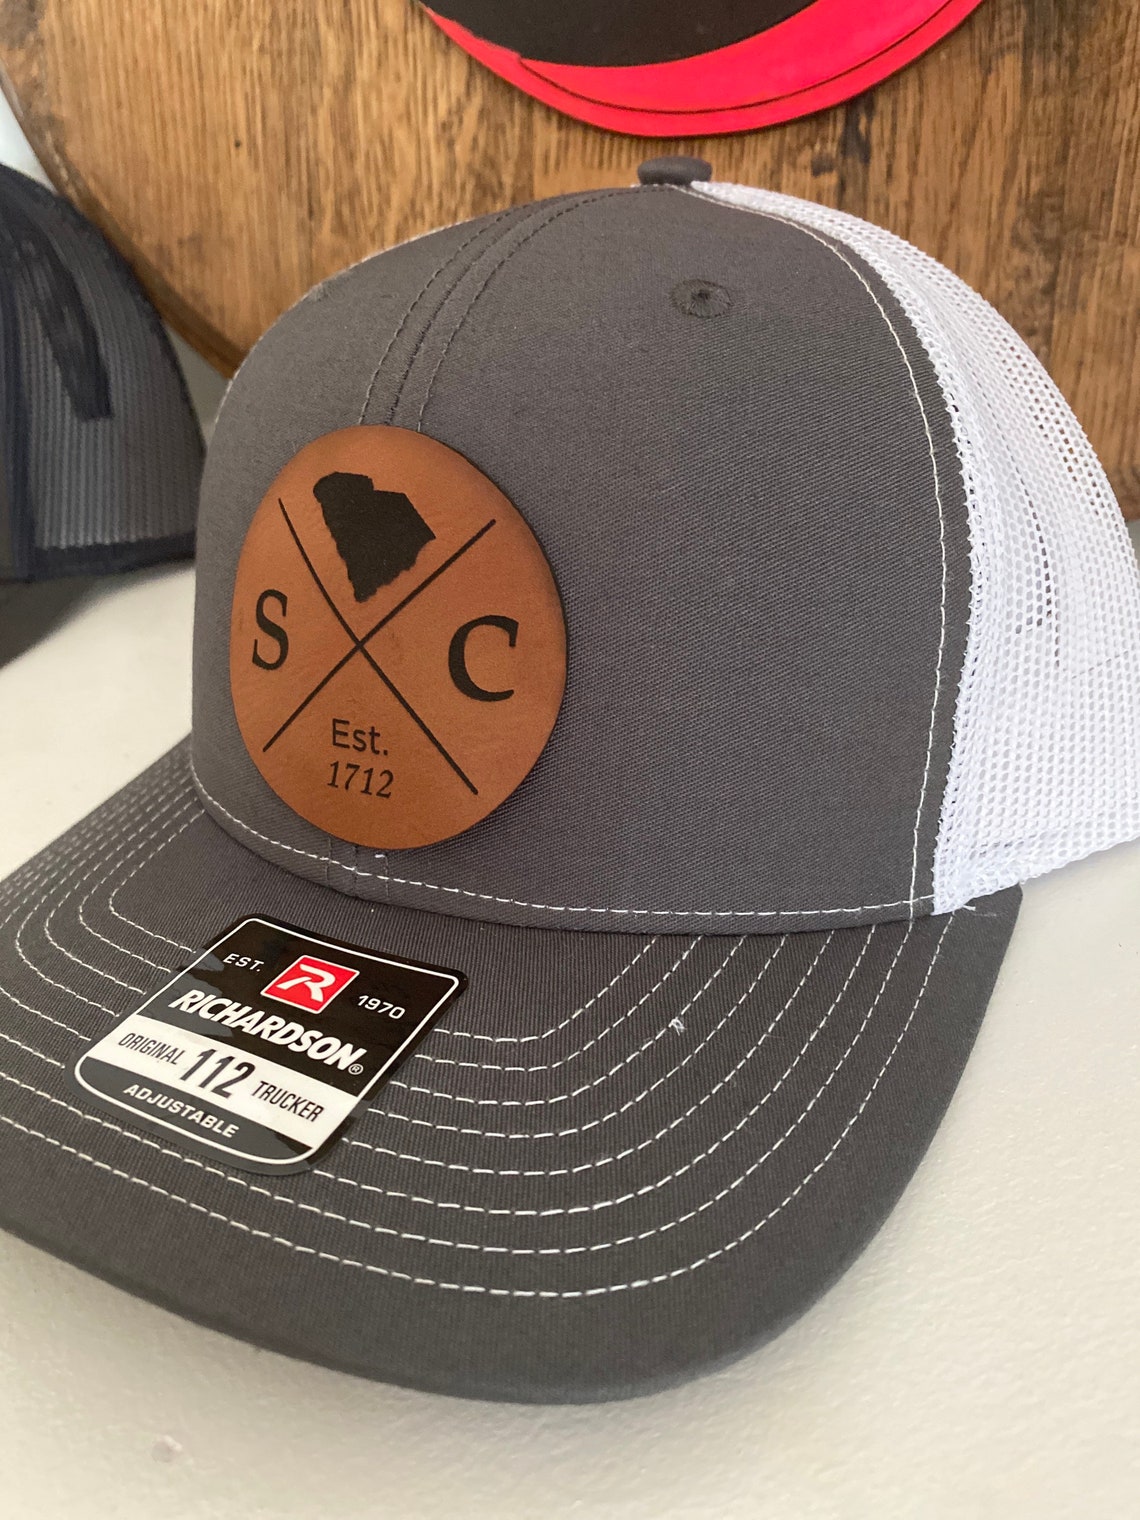 South Carolina Established Leather Engraved Trucker Hat - Etsy